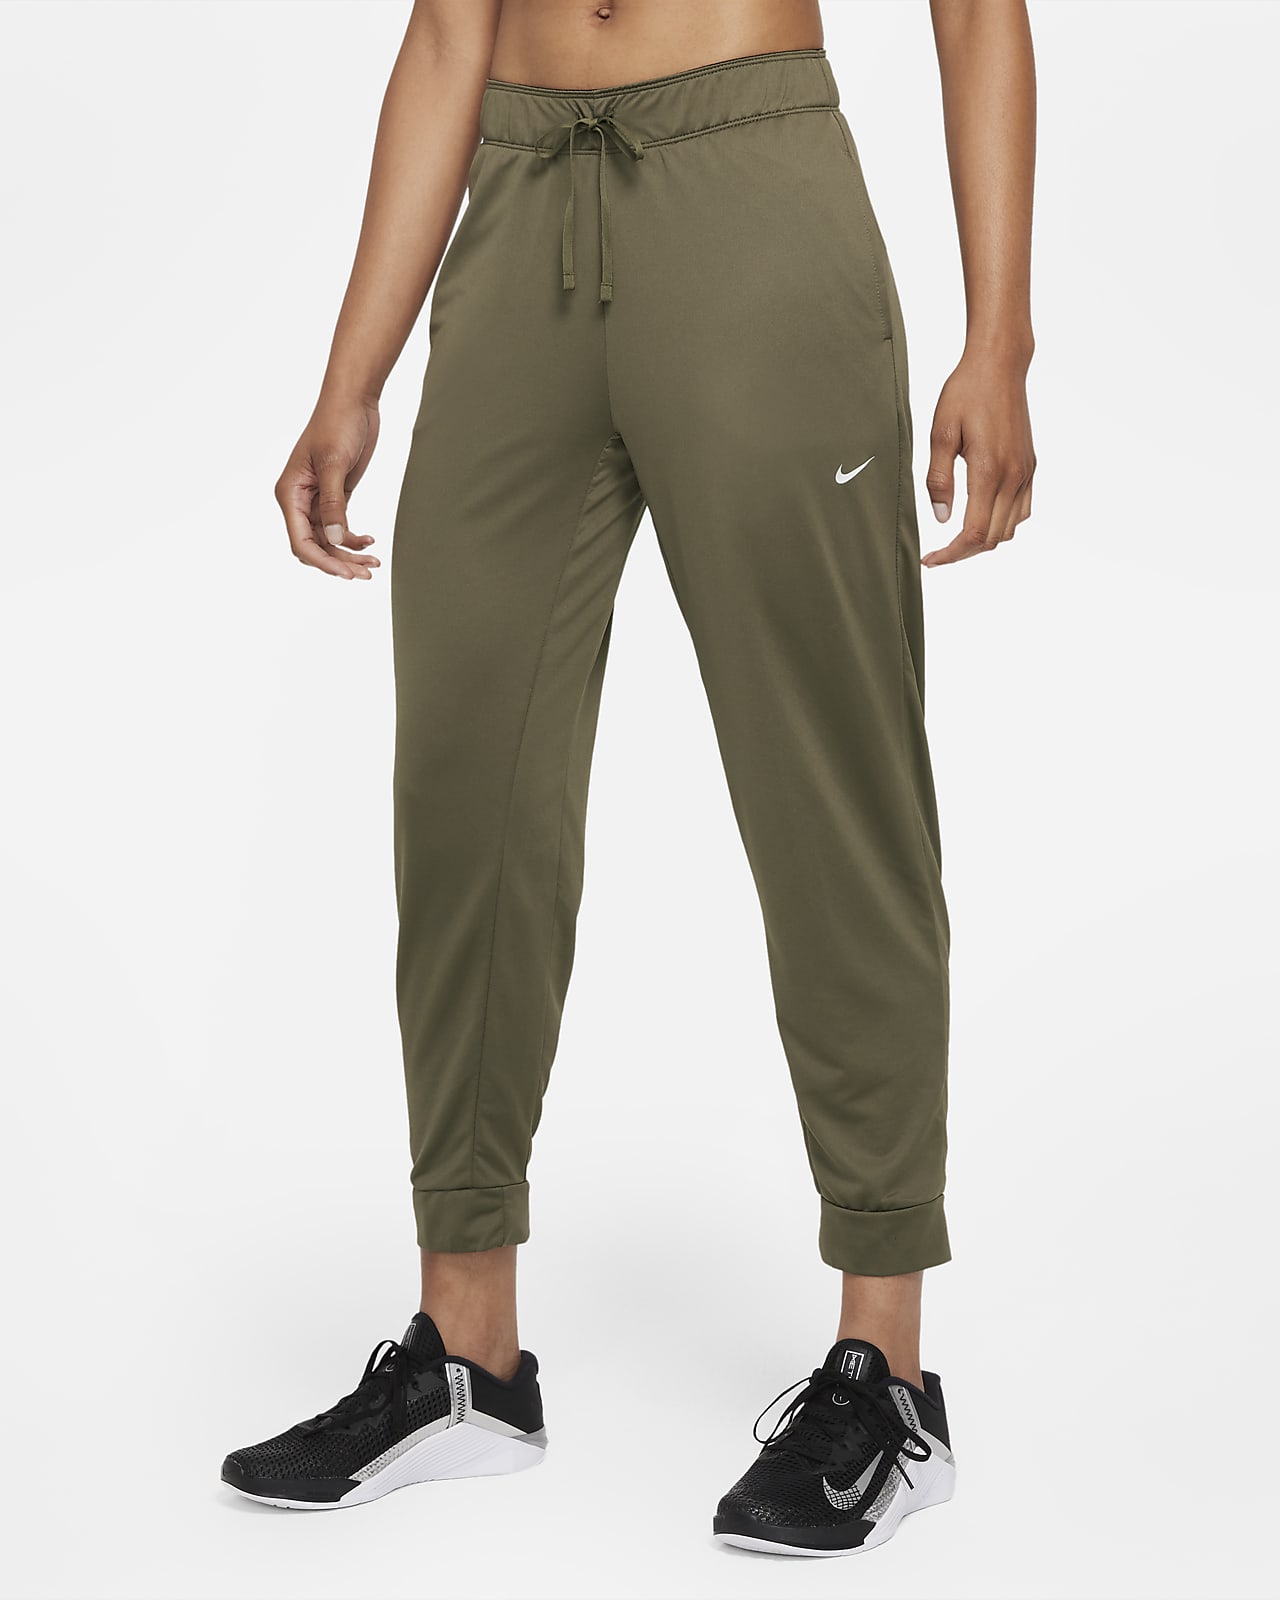 Nike Attack Women's 7/8 Training Pants